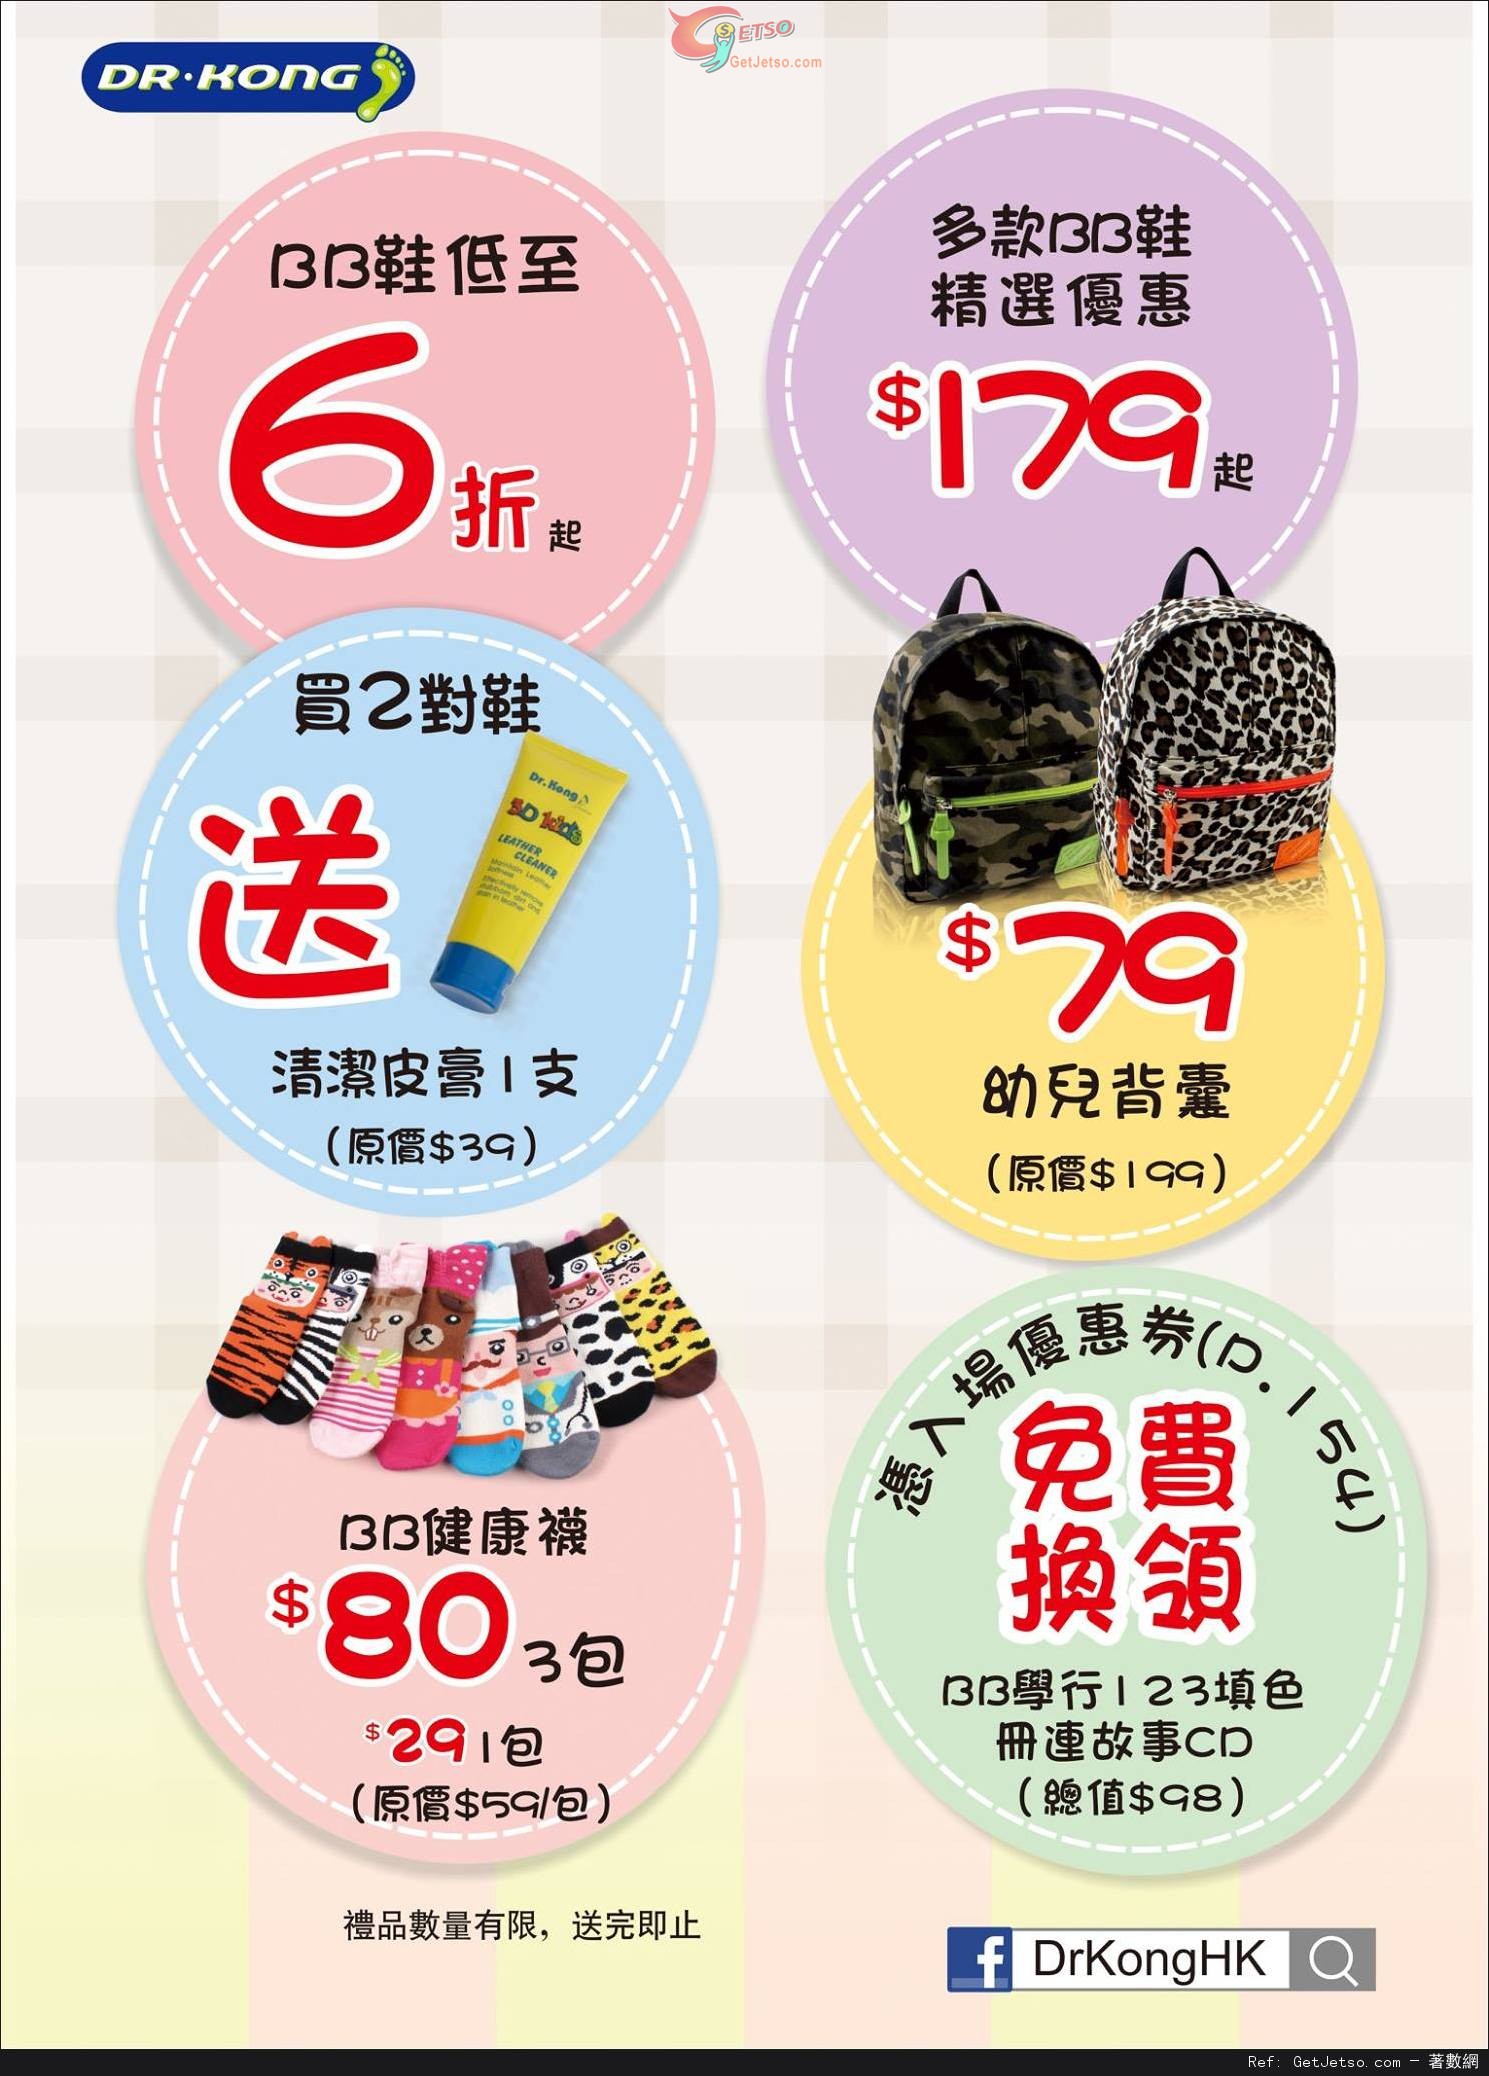 Dr.Kong 大型BB展購物優惠(15年8月6-9日)圖片1